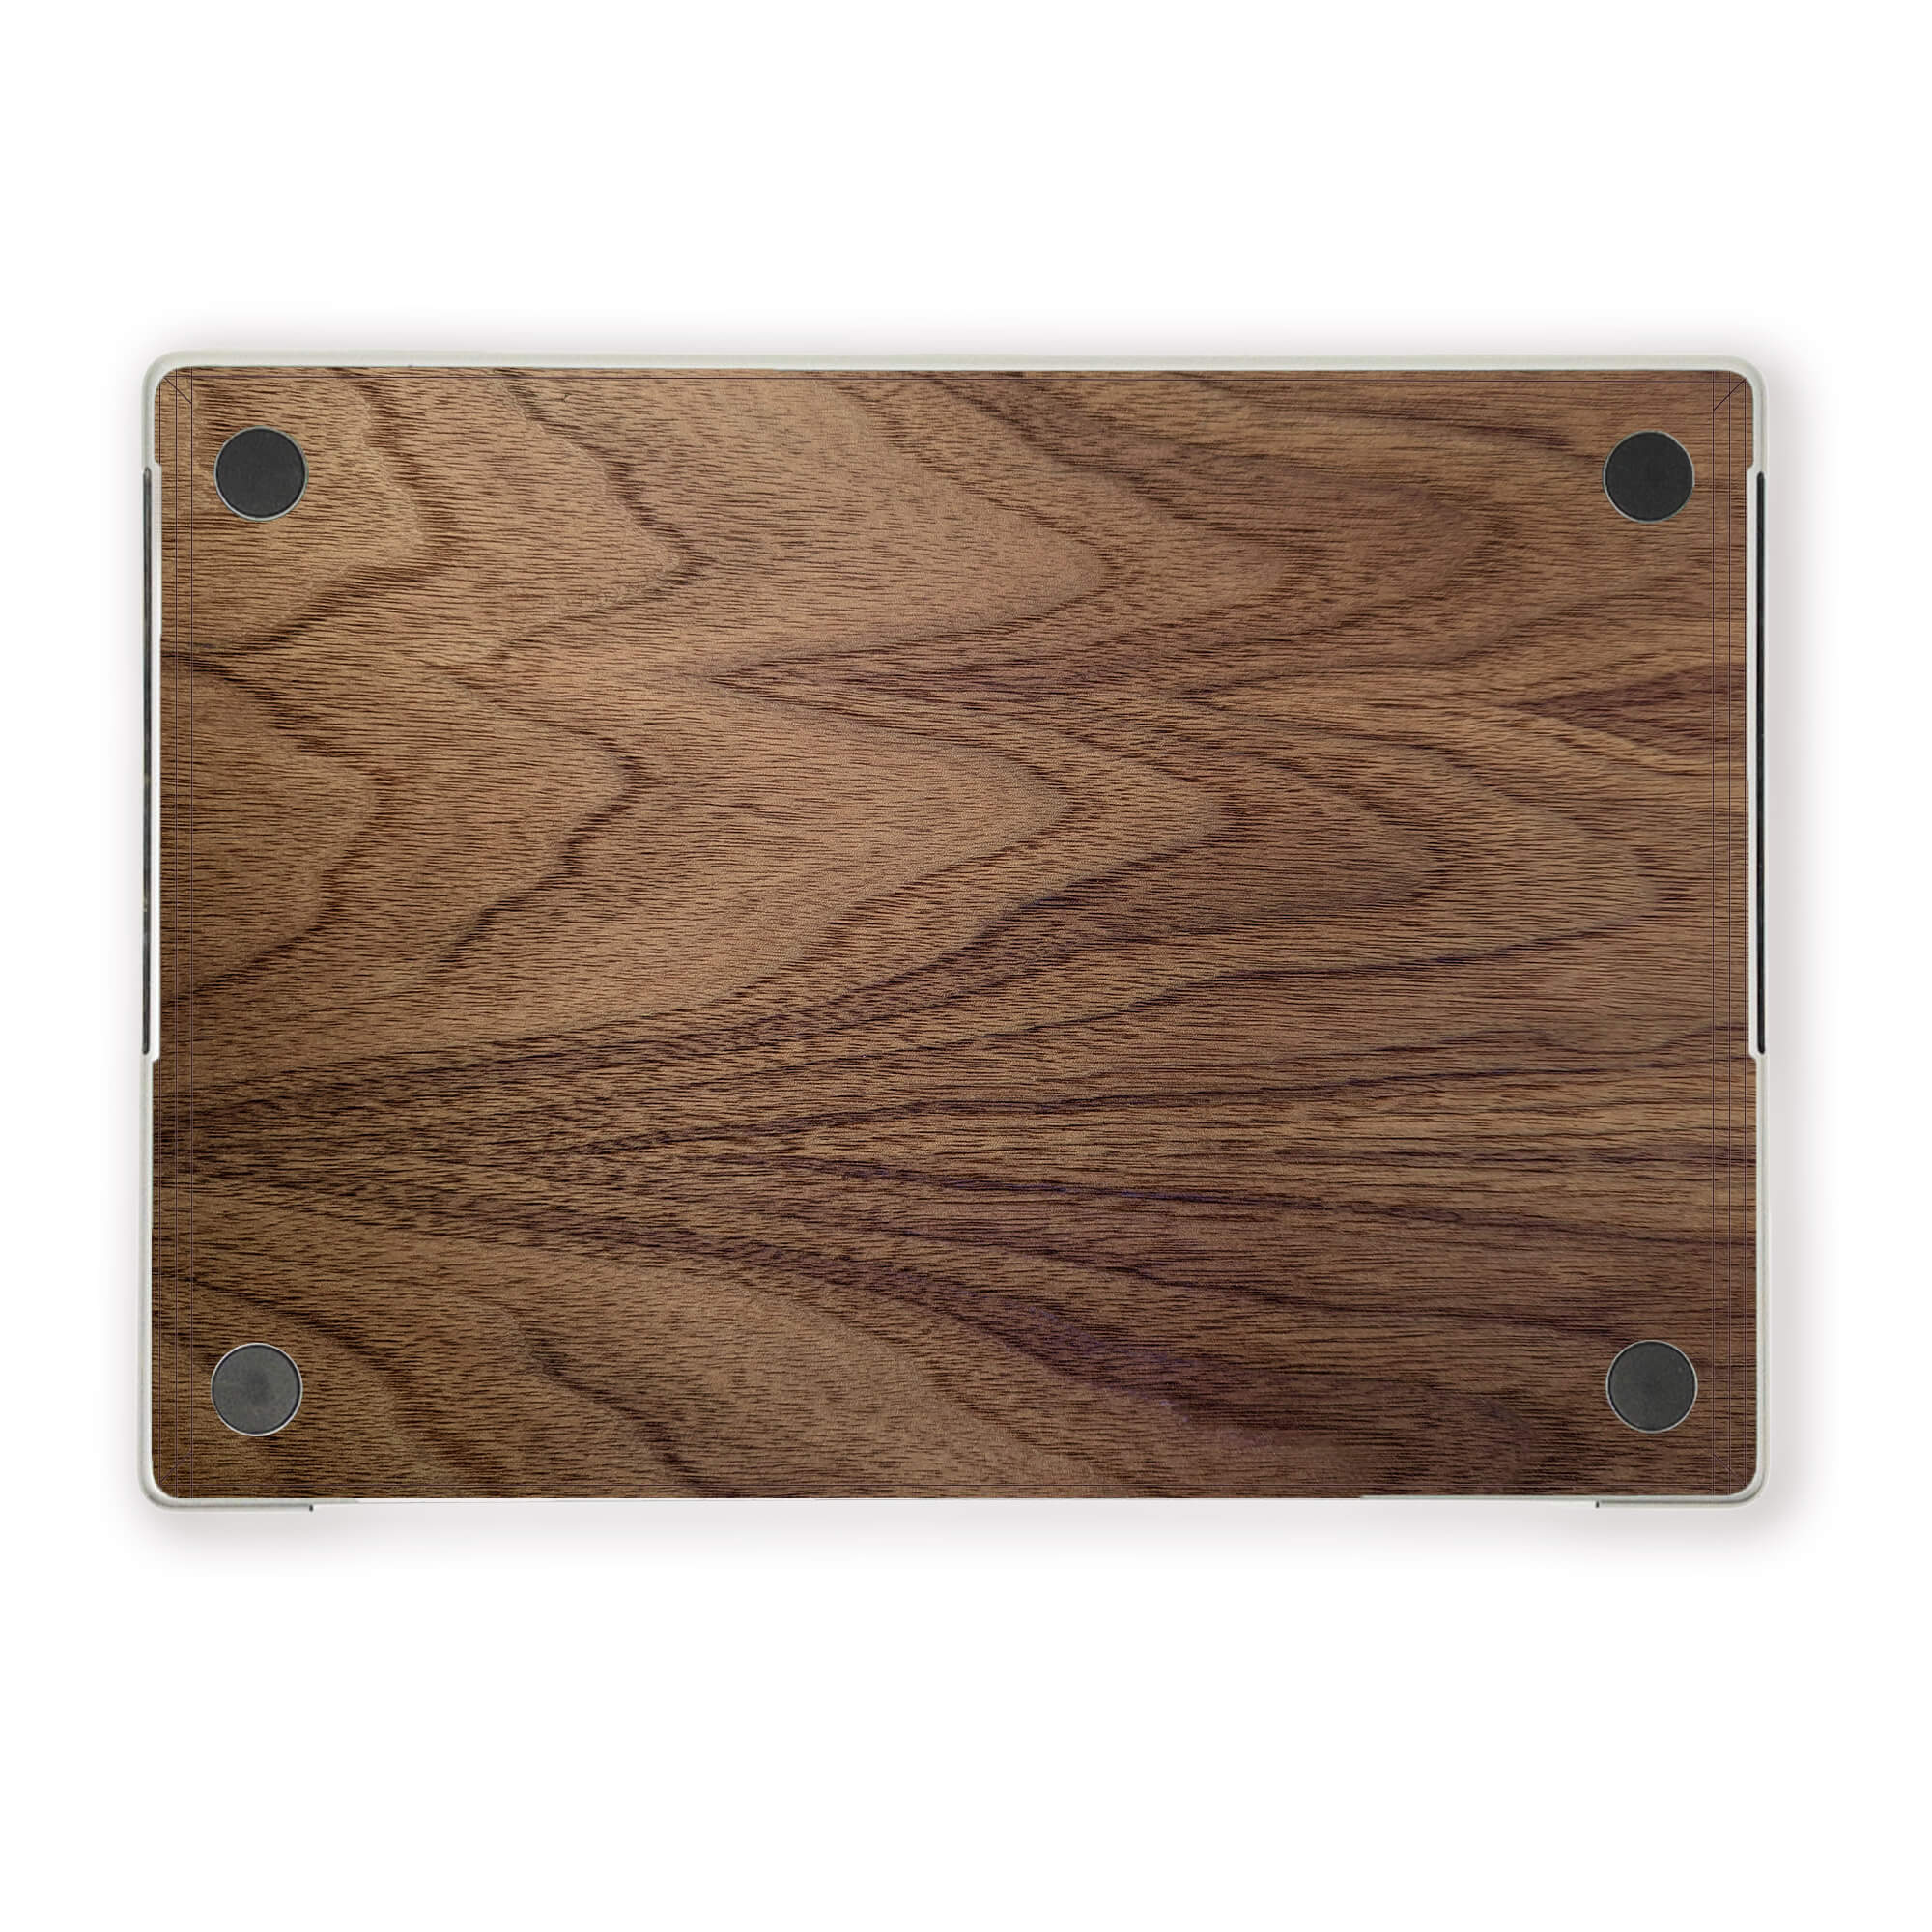 MacBook Wood Skin